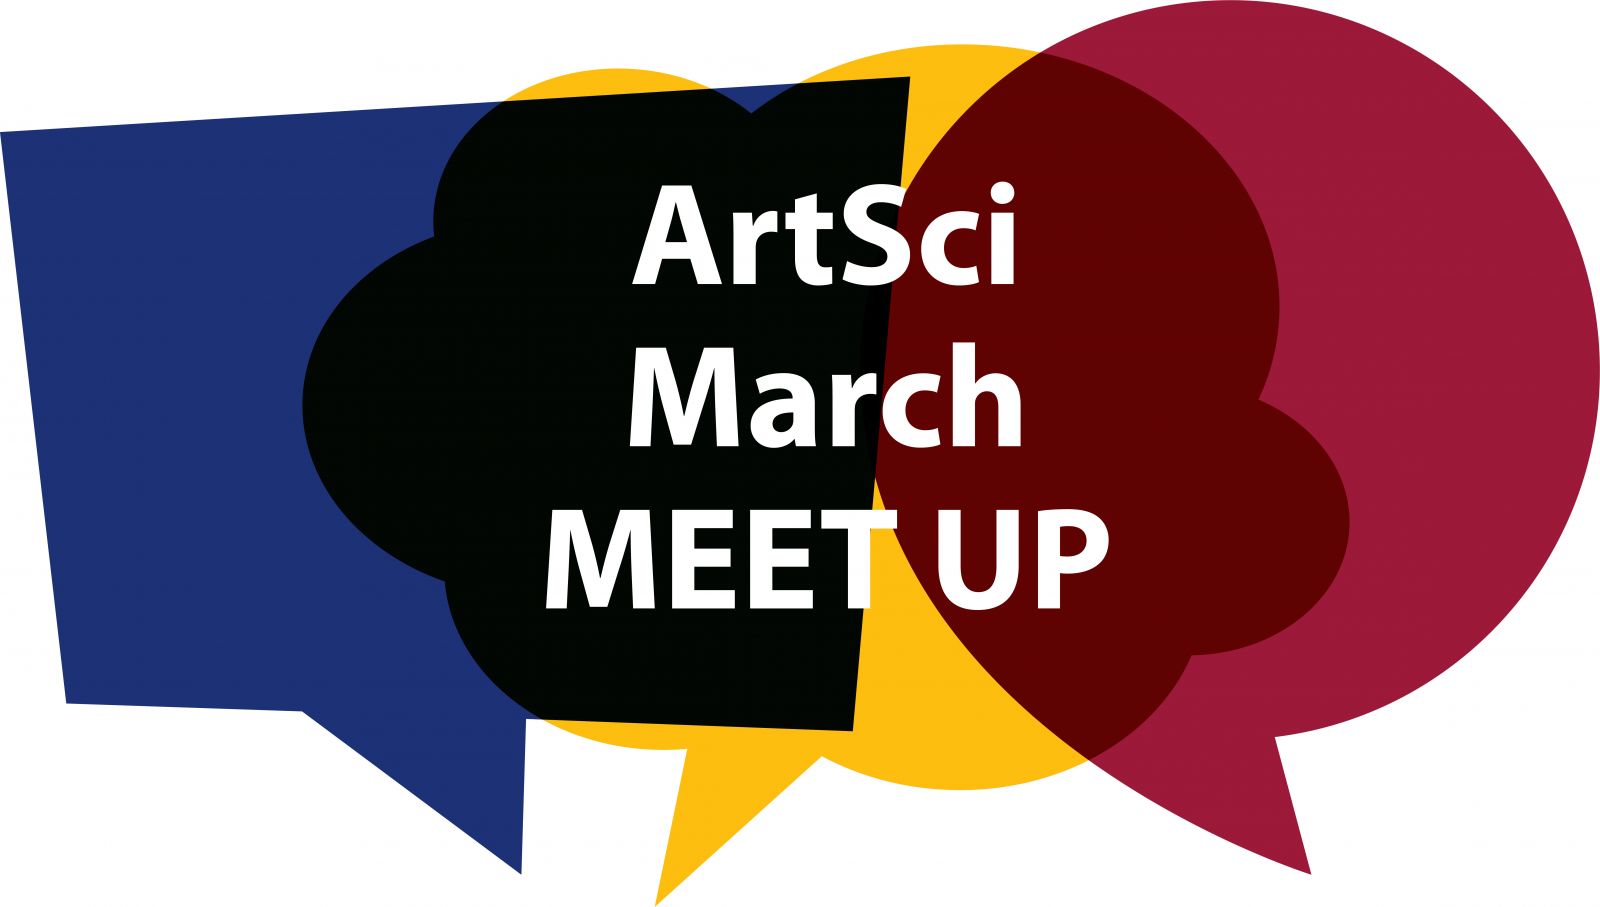 Photo: ArtSci March Meetup advertisement